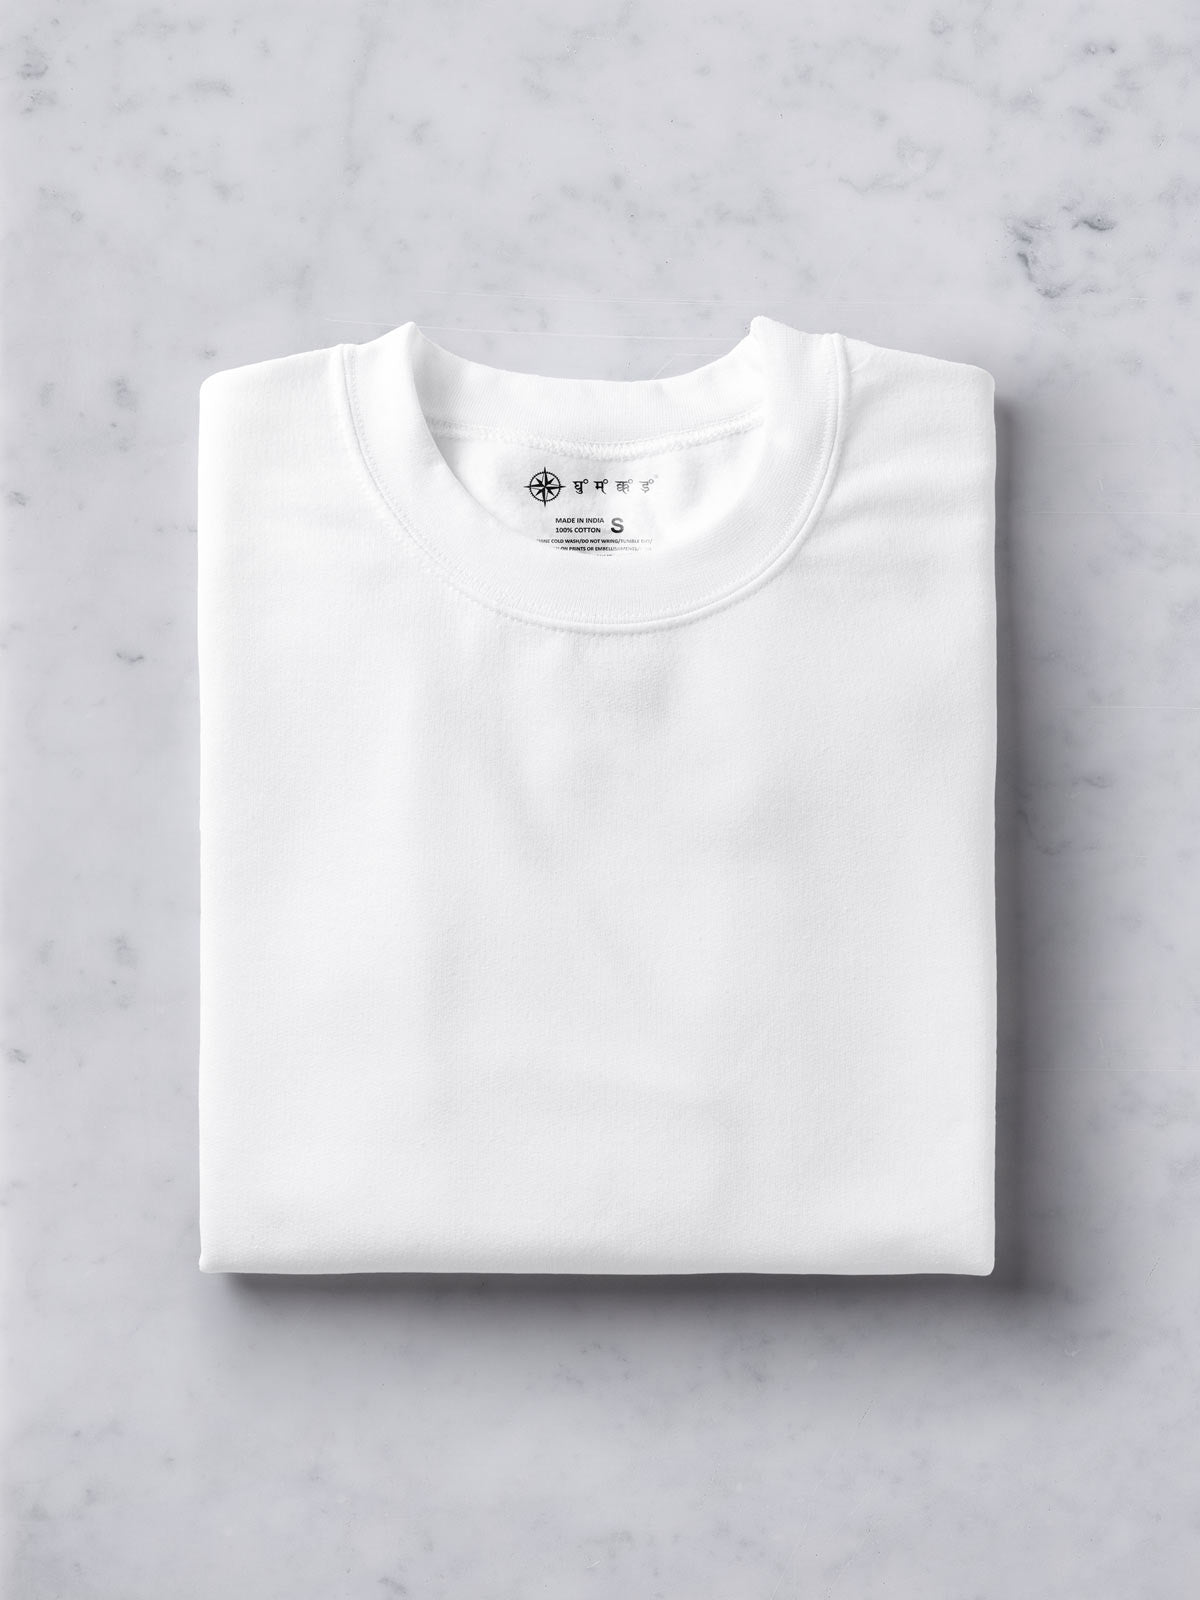 White-t-shirt-for-men by Ghumakkad